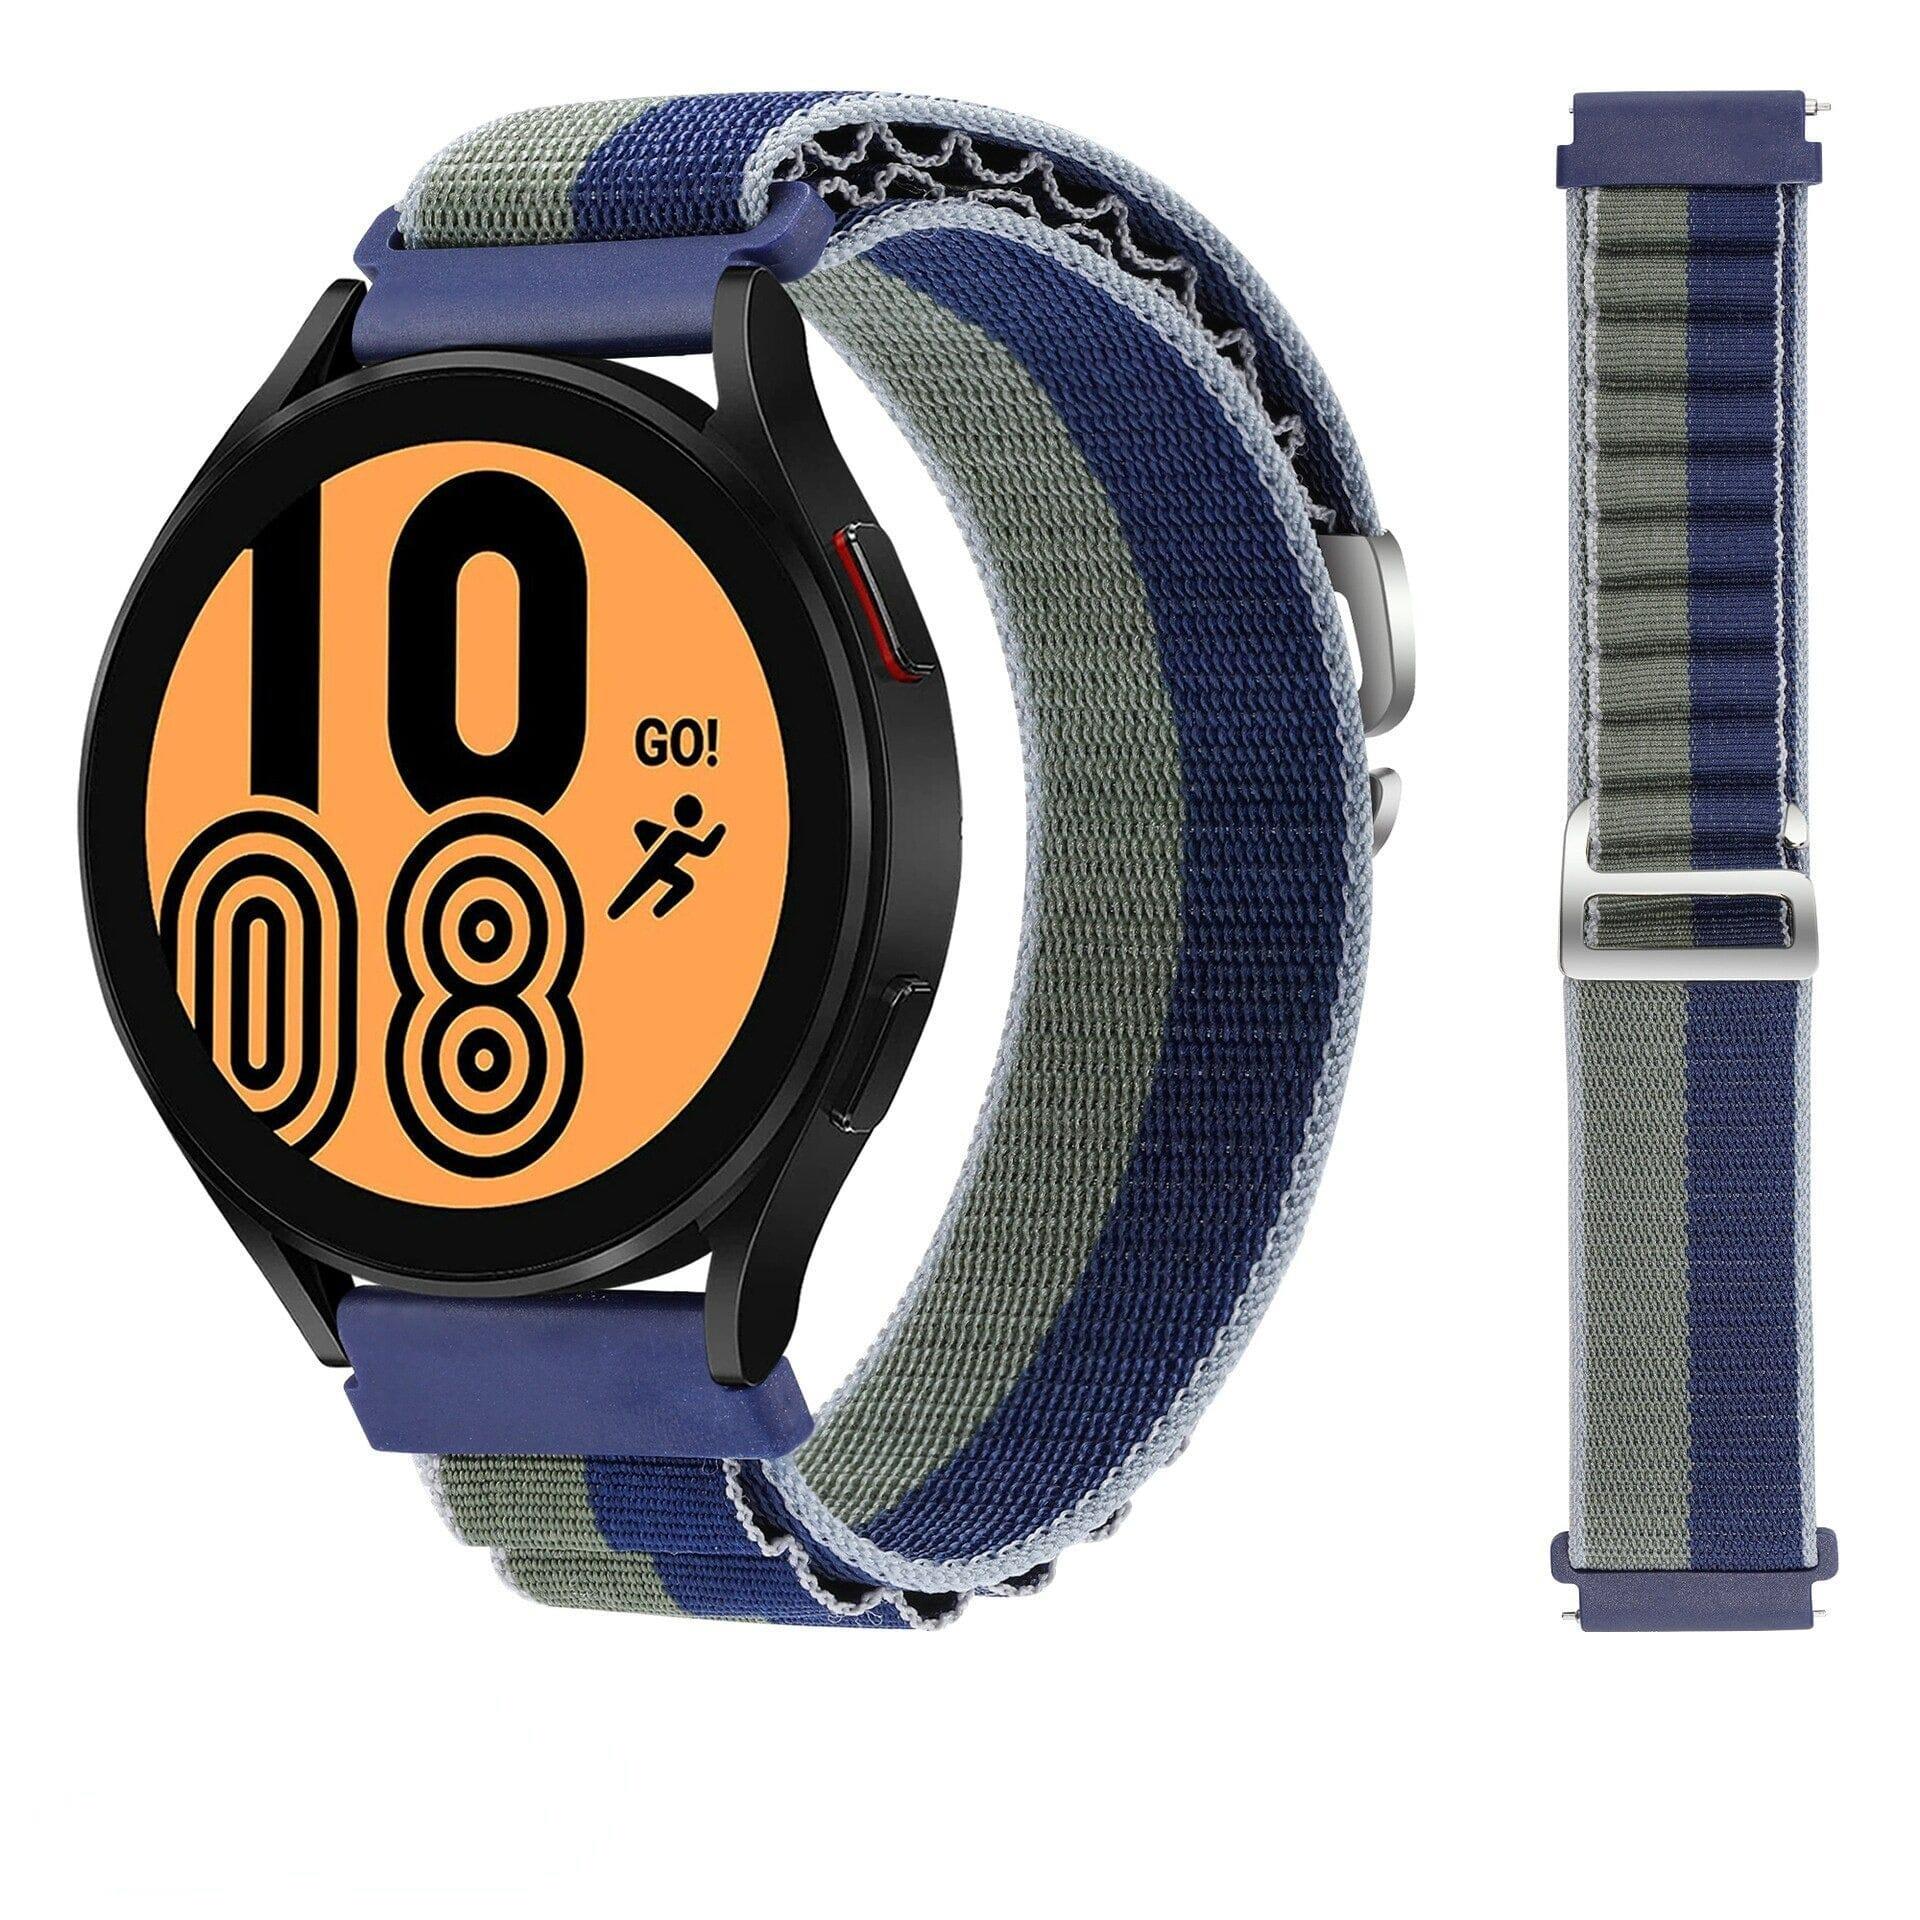 Alpine Loop Watch Straps Compatible with the Suunto 7 & D5